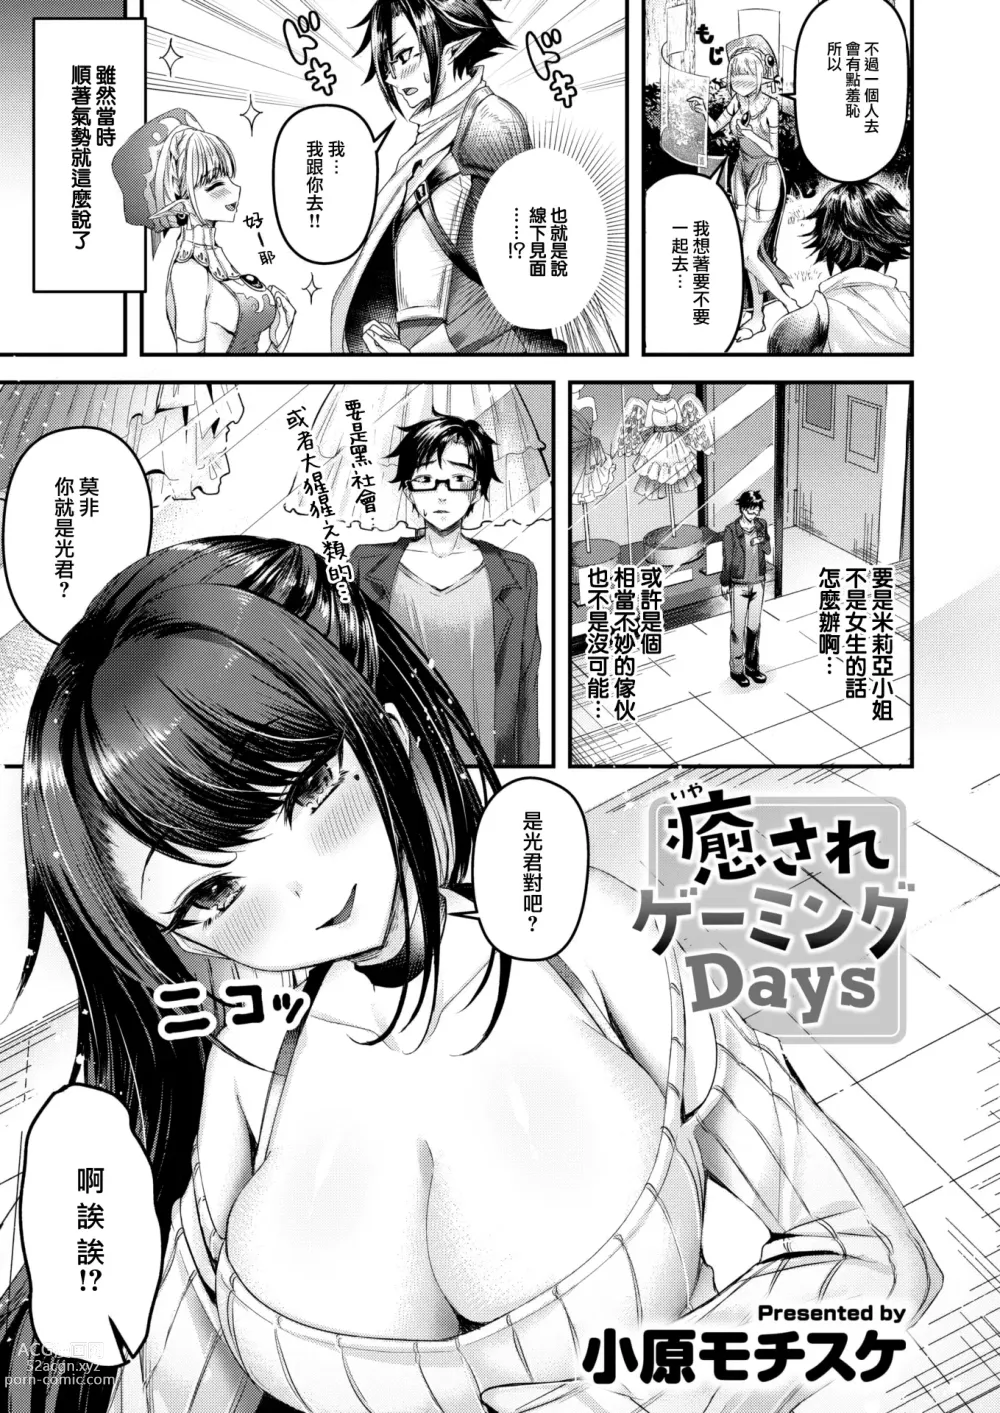 Page 4 of manga Iyasare Gaming Days